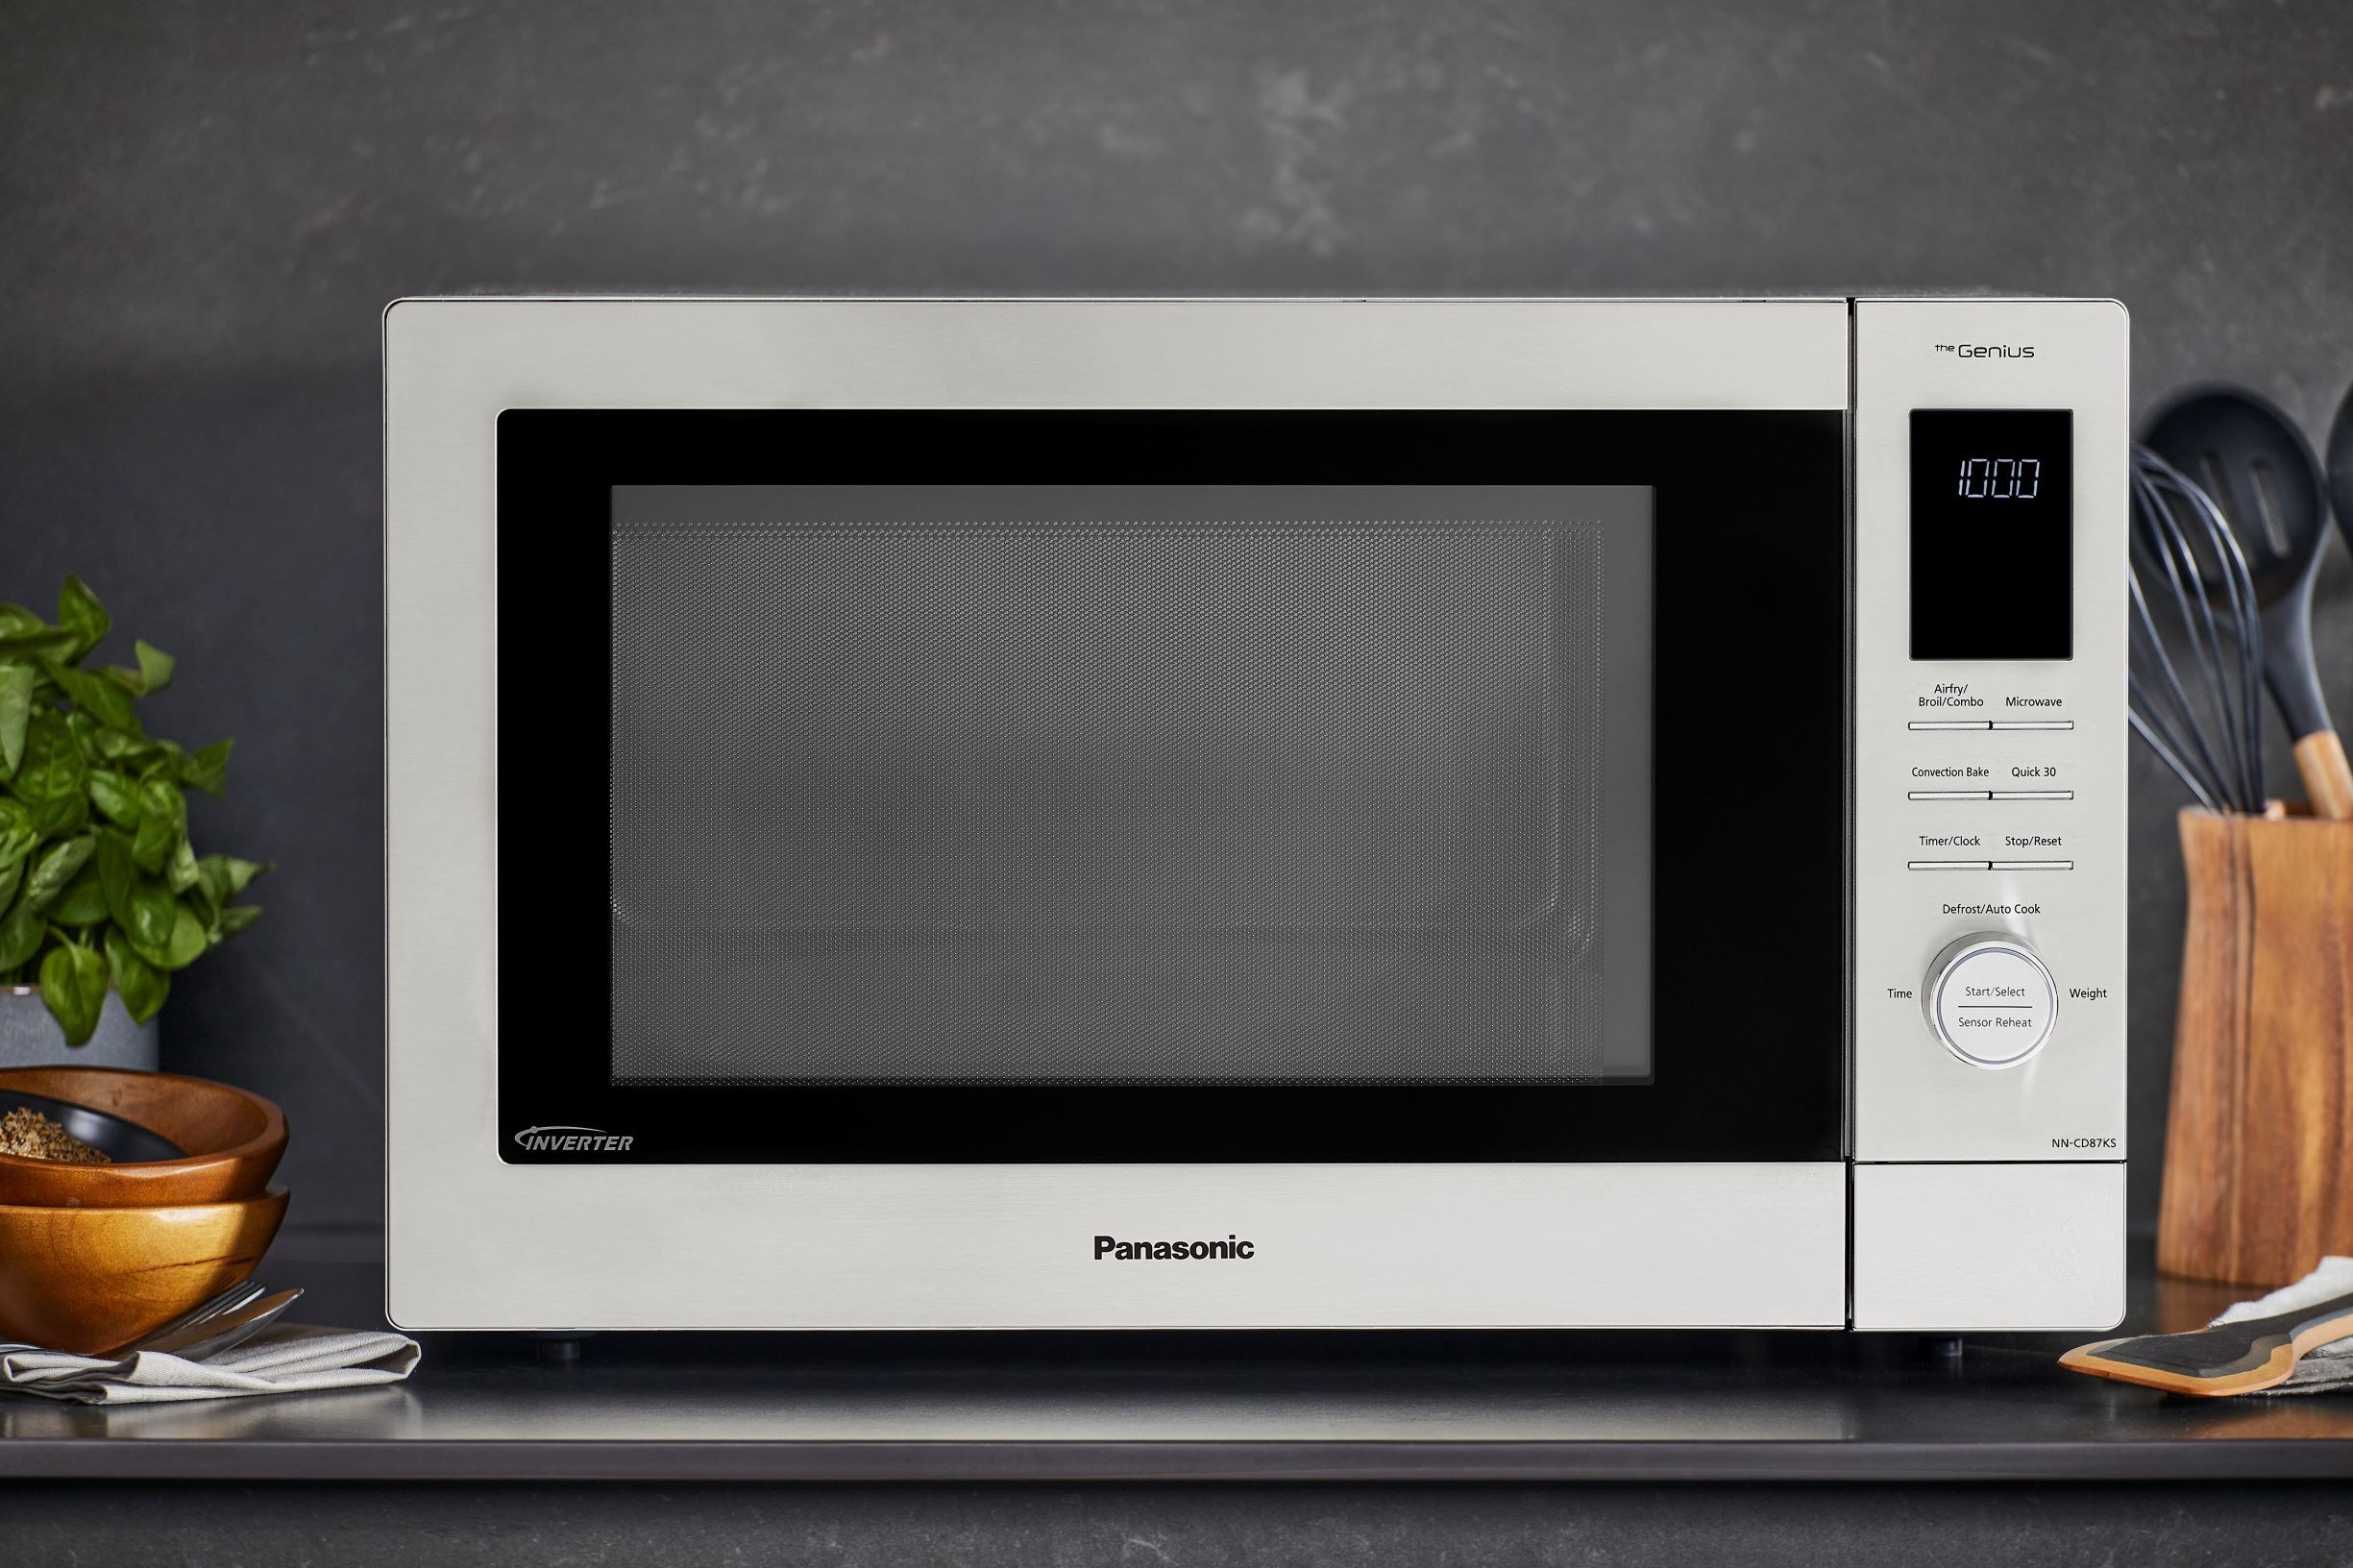 Panasonic Launches Versatile Nn Cd87ks Home Chef 4 In 1 Countertop Multi Oven